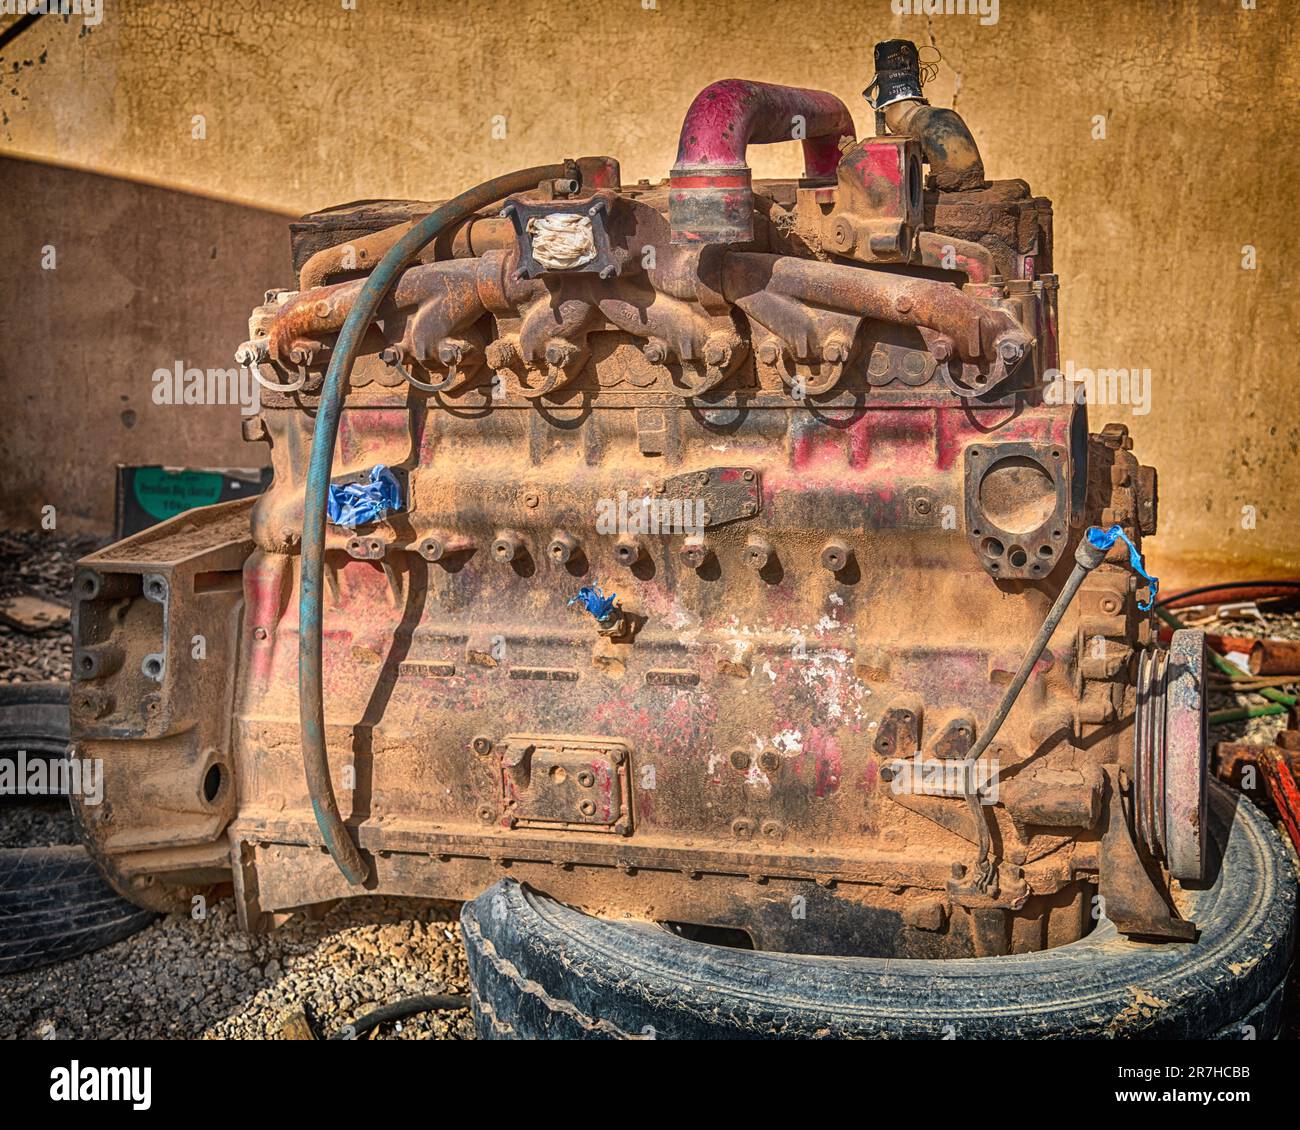 Junkyard Truck Engines - HDR look Stock Photo